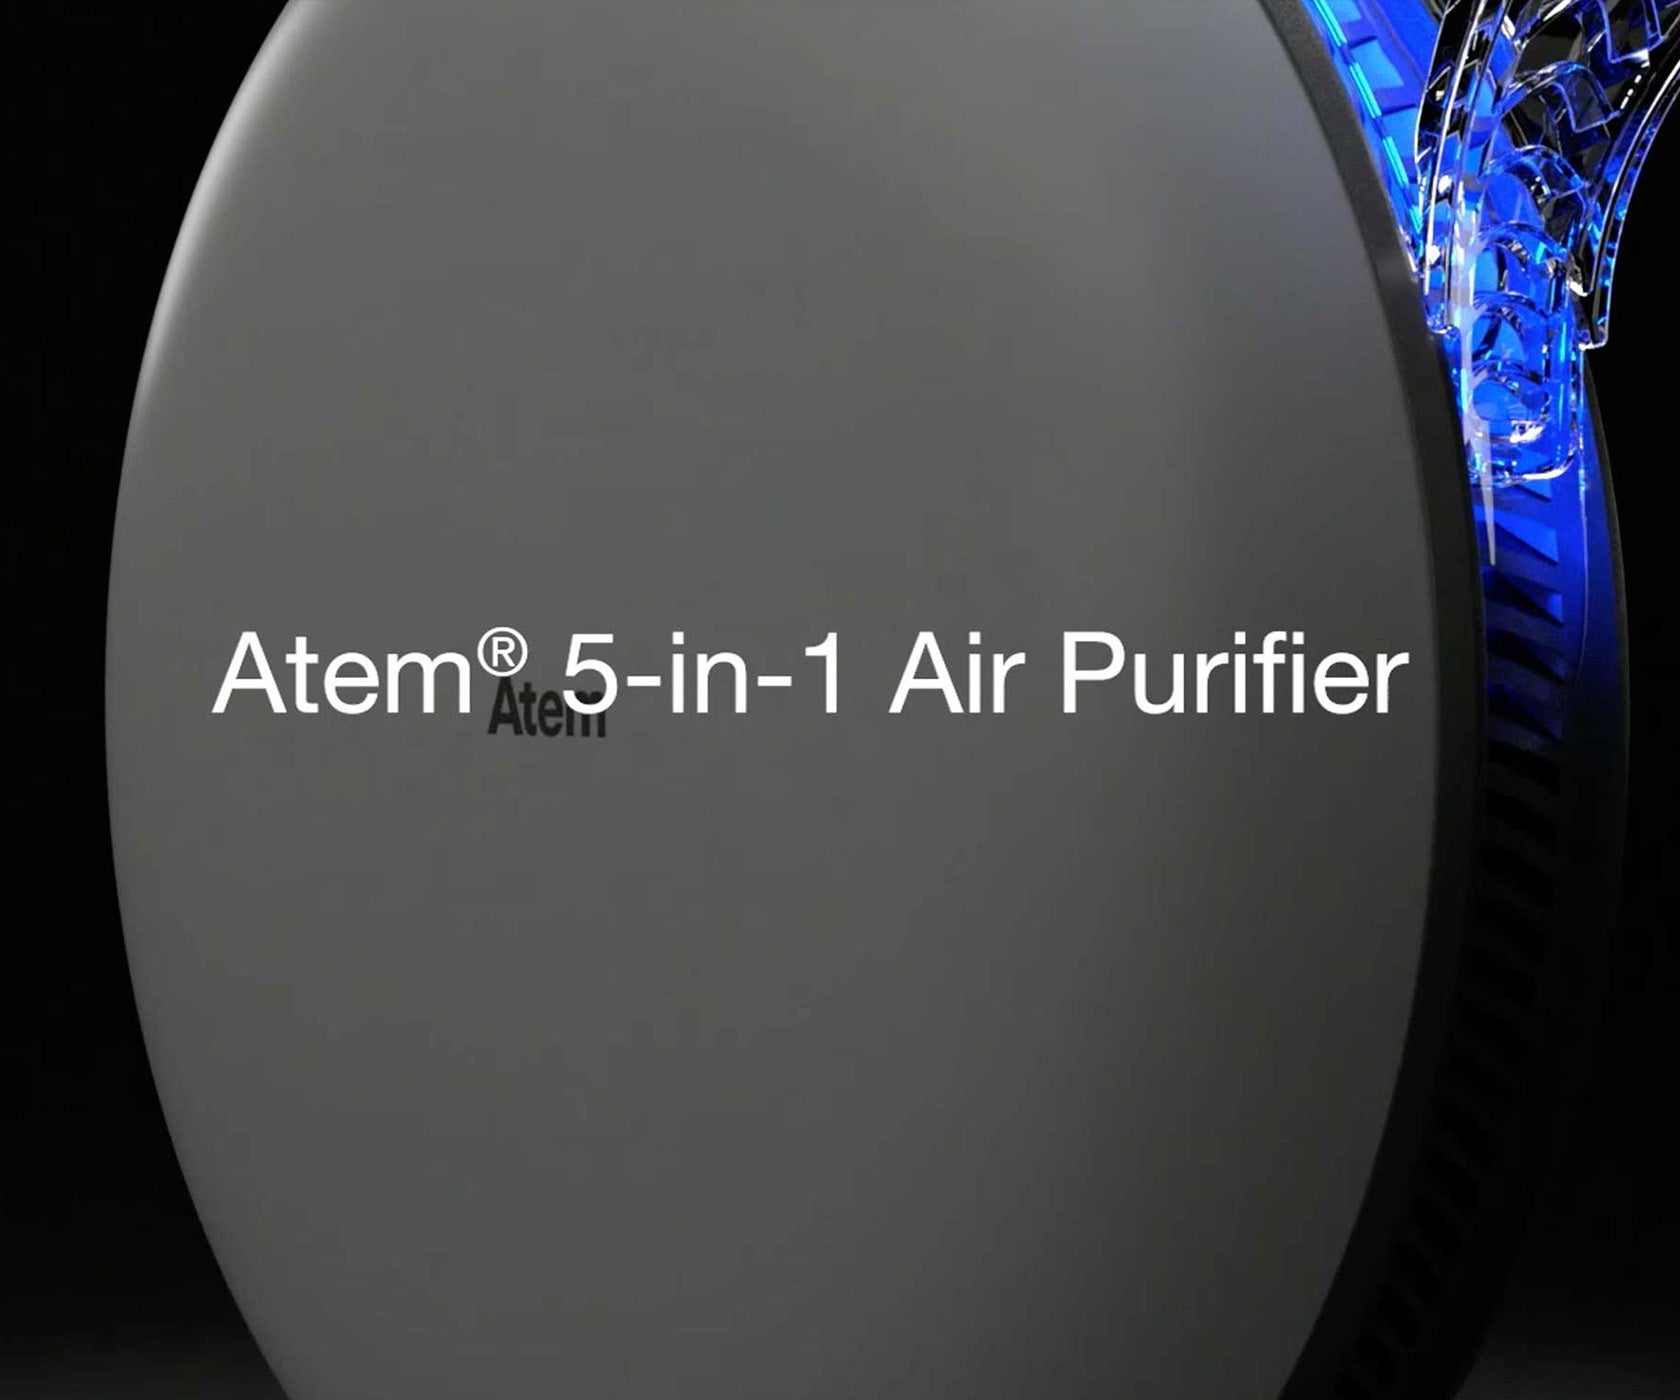 Atem Desk 5-in-1 Air Purifier